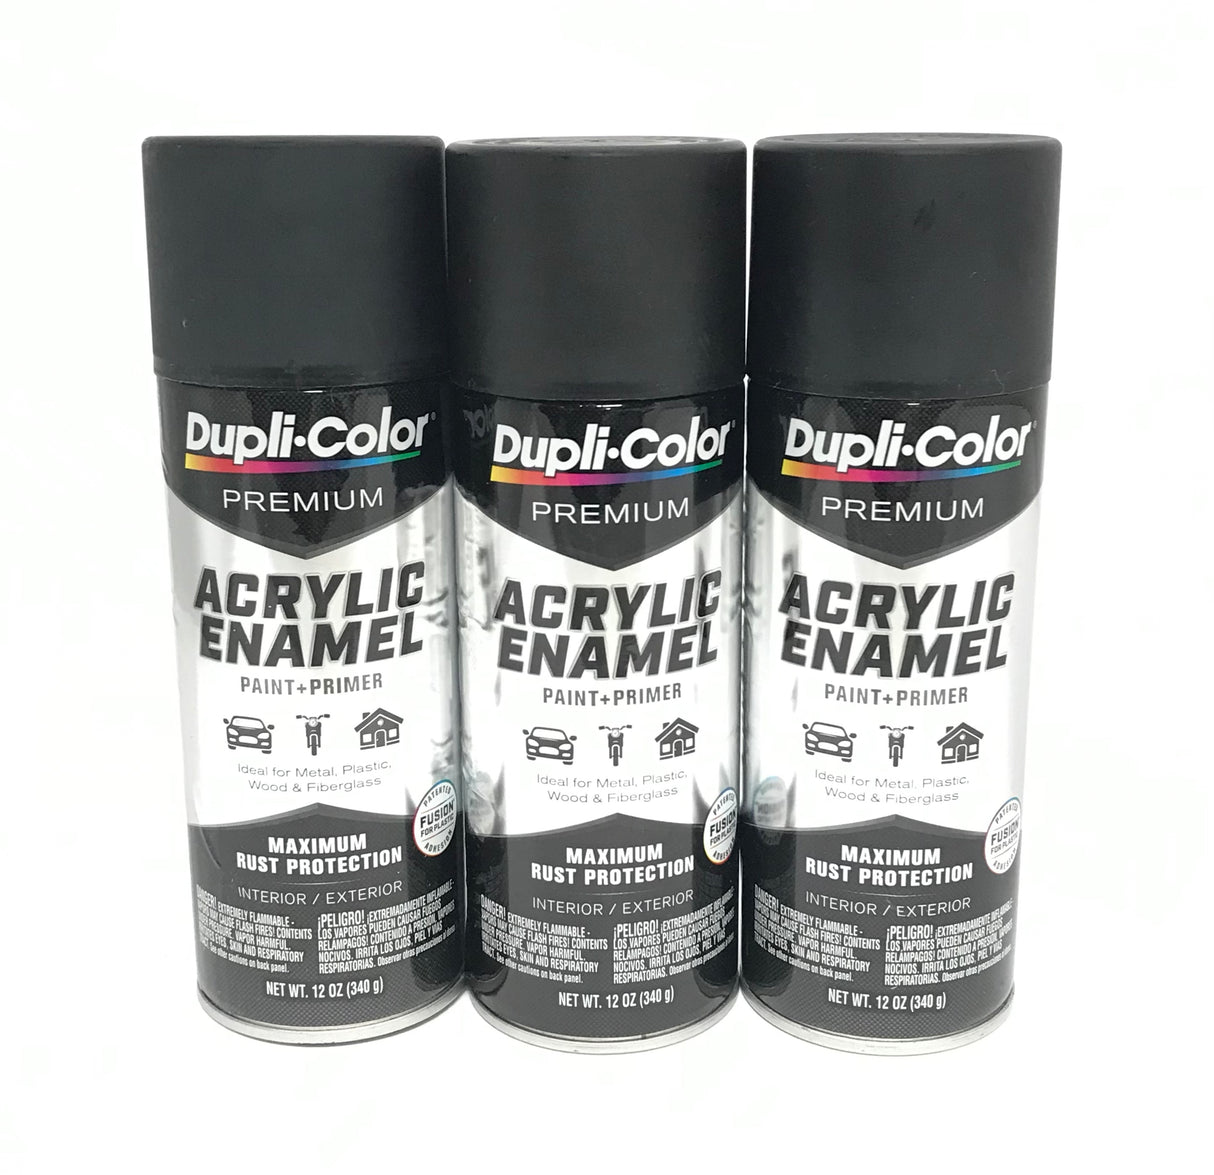 Duplicolor PAE101-3 PACK SEMI-GLOSS BLACK Premium Acrylic Enamel - Max Rust Protection - 12oz